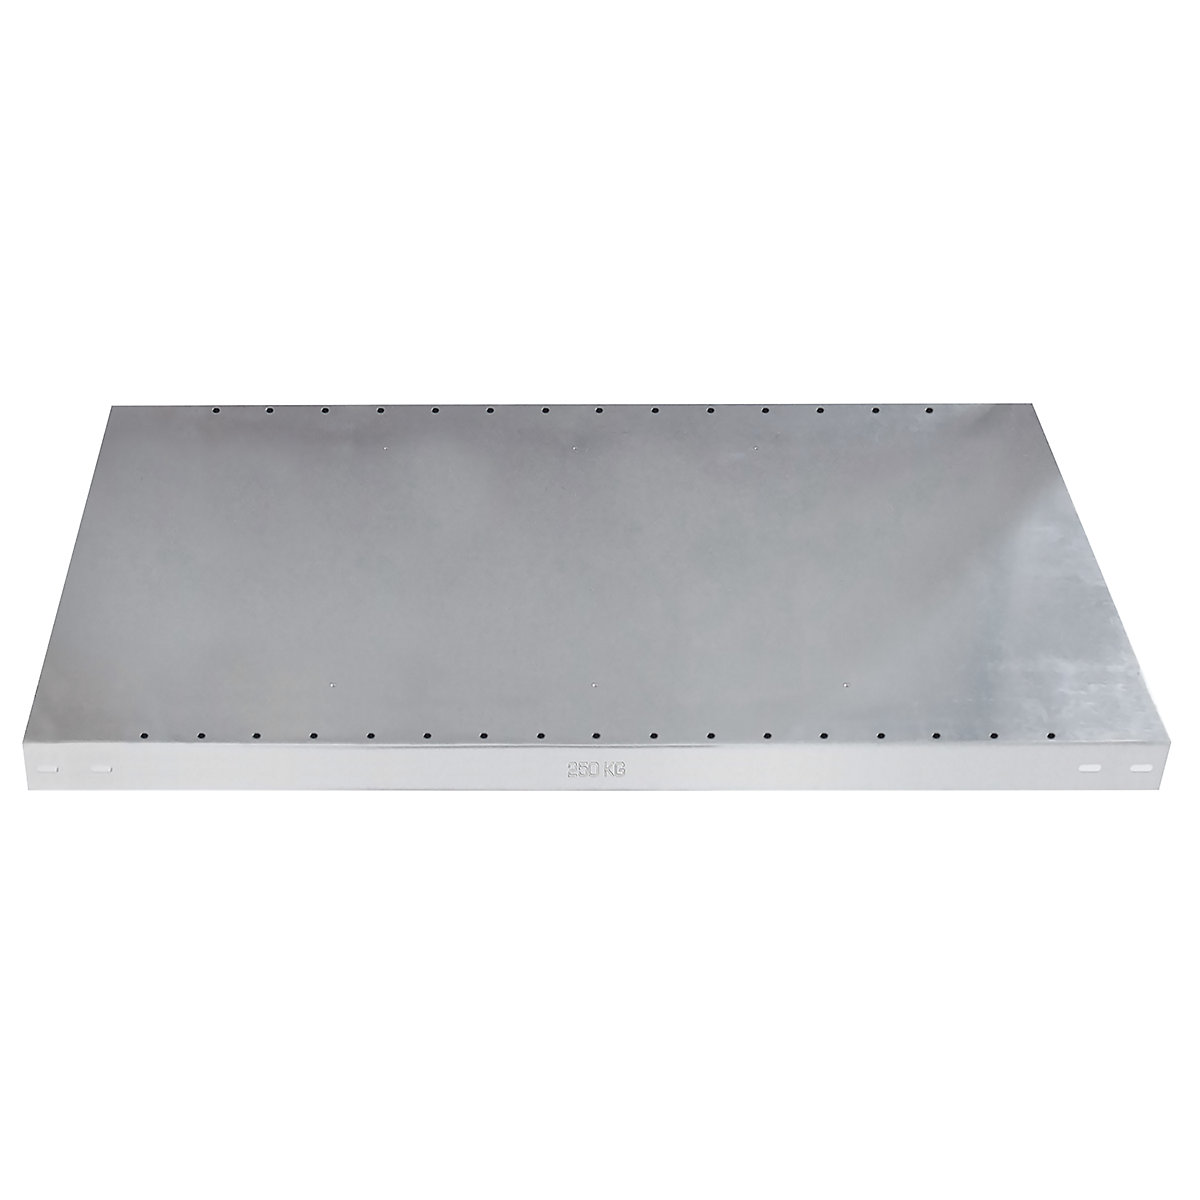 Additional zinc plated shelf – eurokraft pro, length 40 mm, pack of 2, WxD 1300 x 600 mm-6